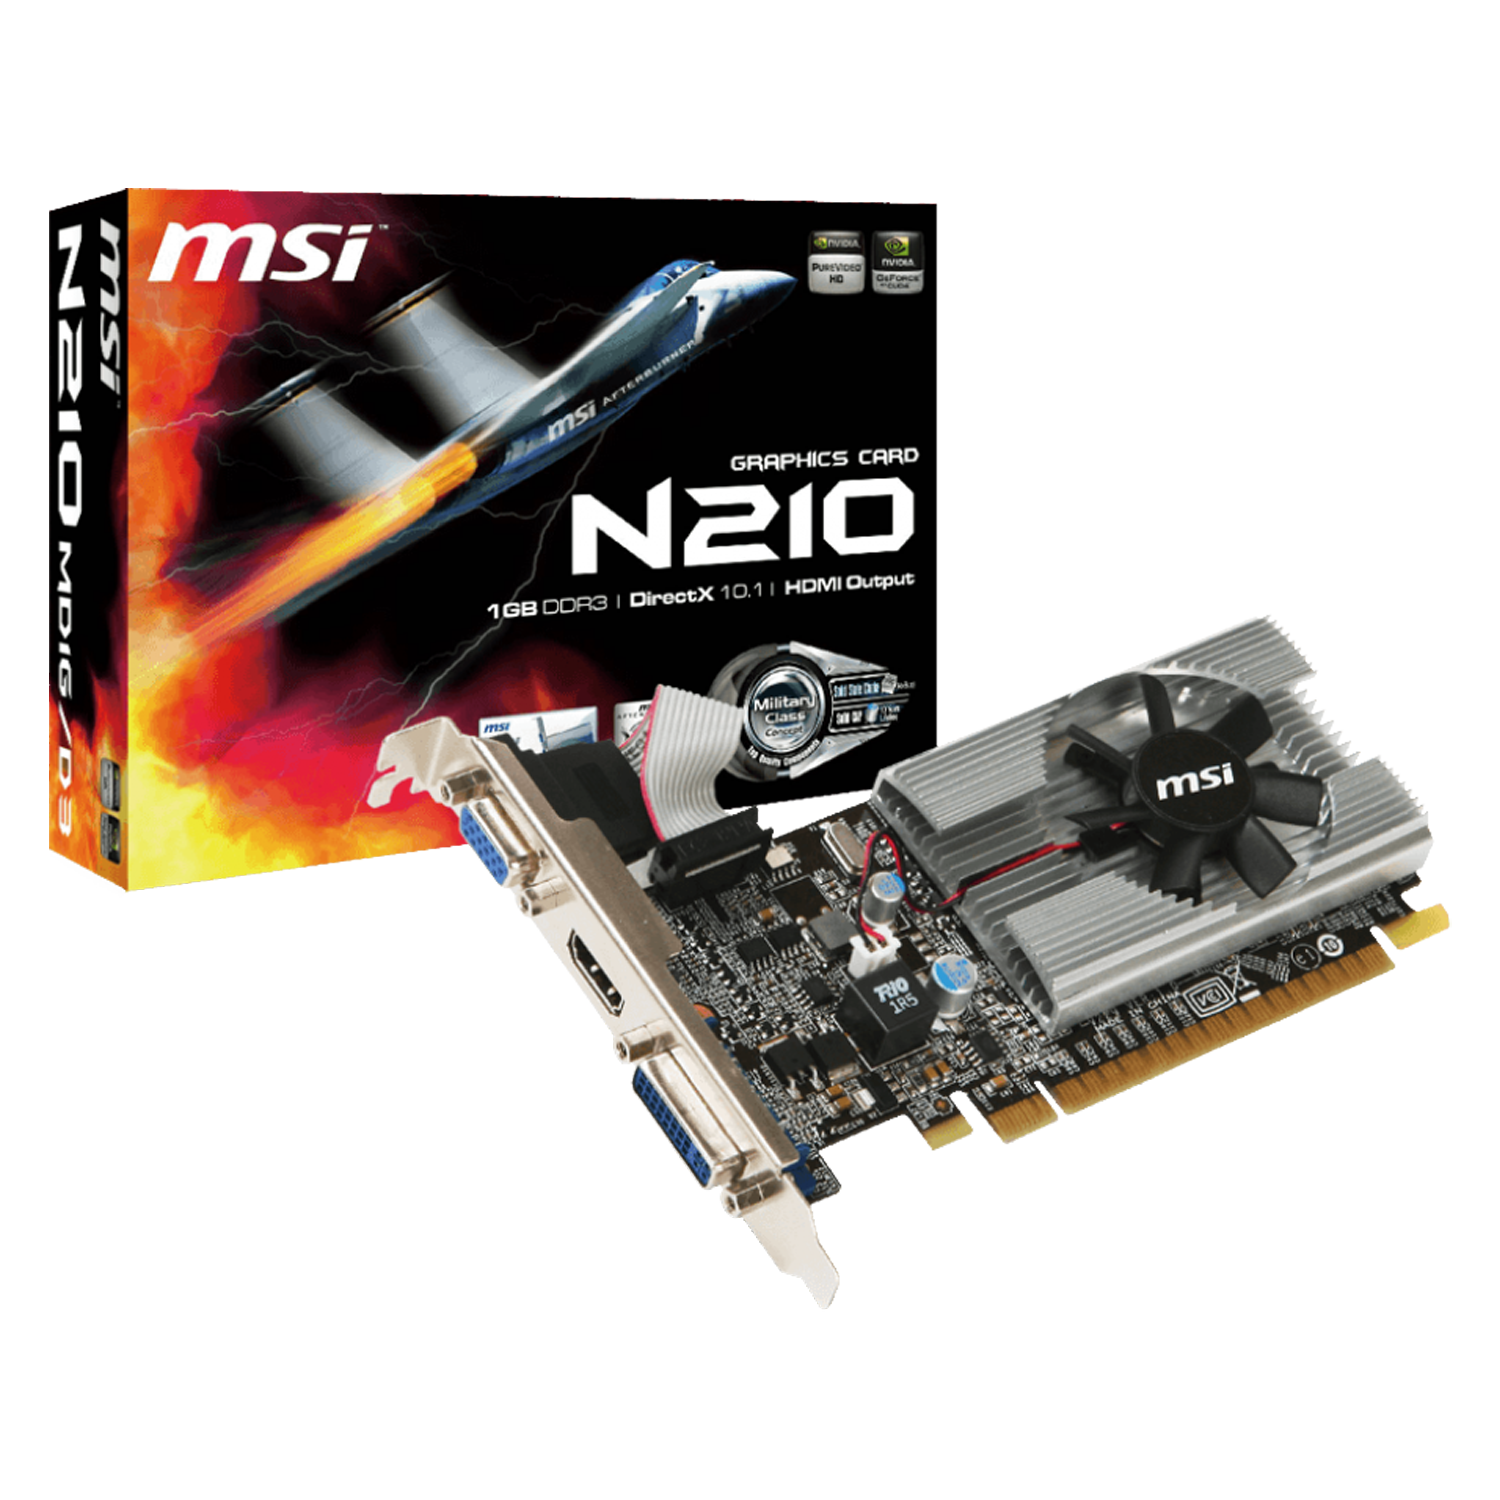 Placa de Vídeo MSI N210-MD NVIDIA GeForce GT 210 1GB GDDR3 - N210-MD1G/D3